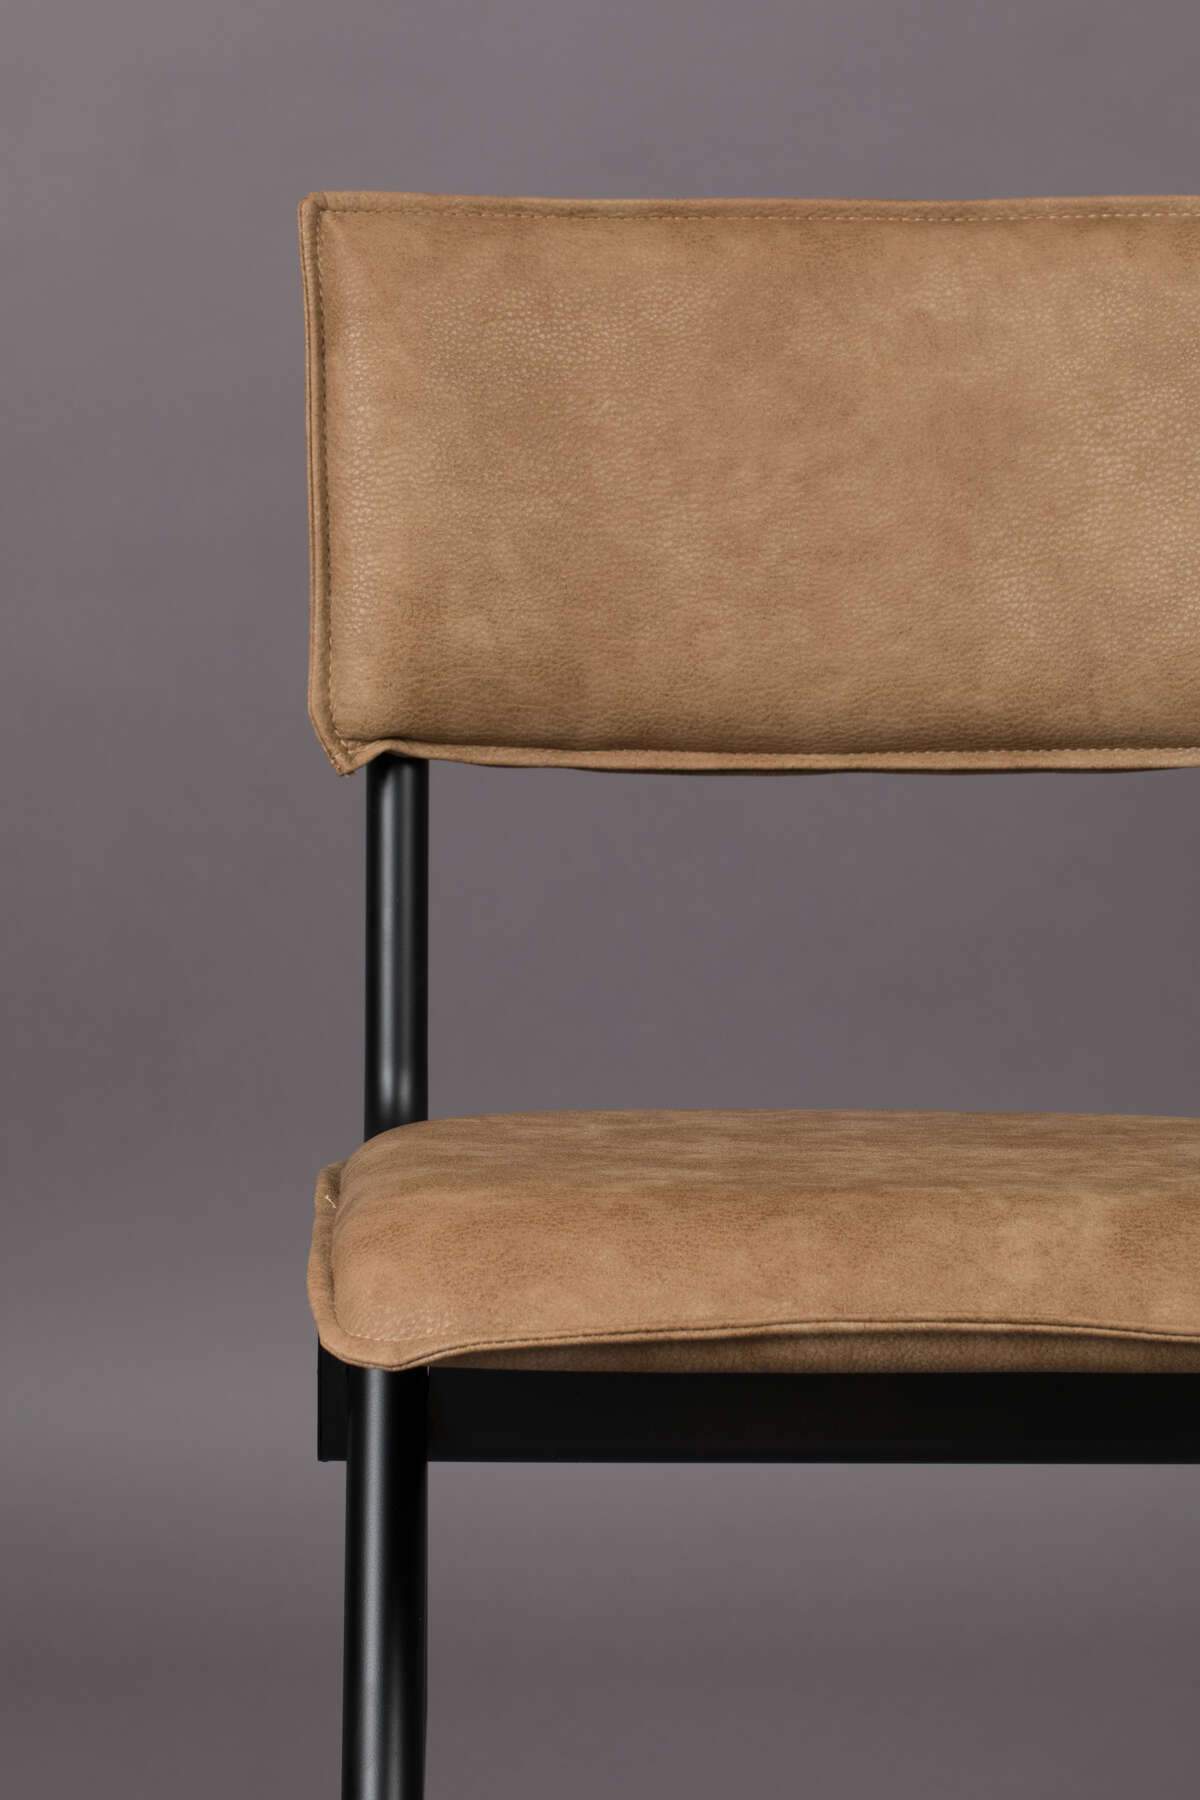 WILLOW chair eco leather brown, Dutchbone, Eye on Design